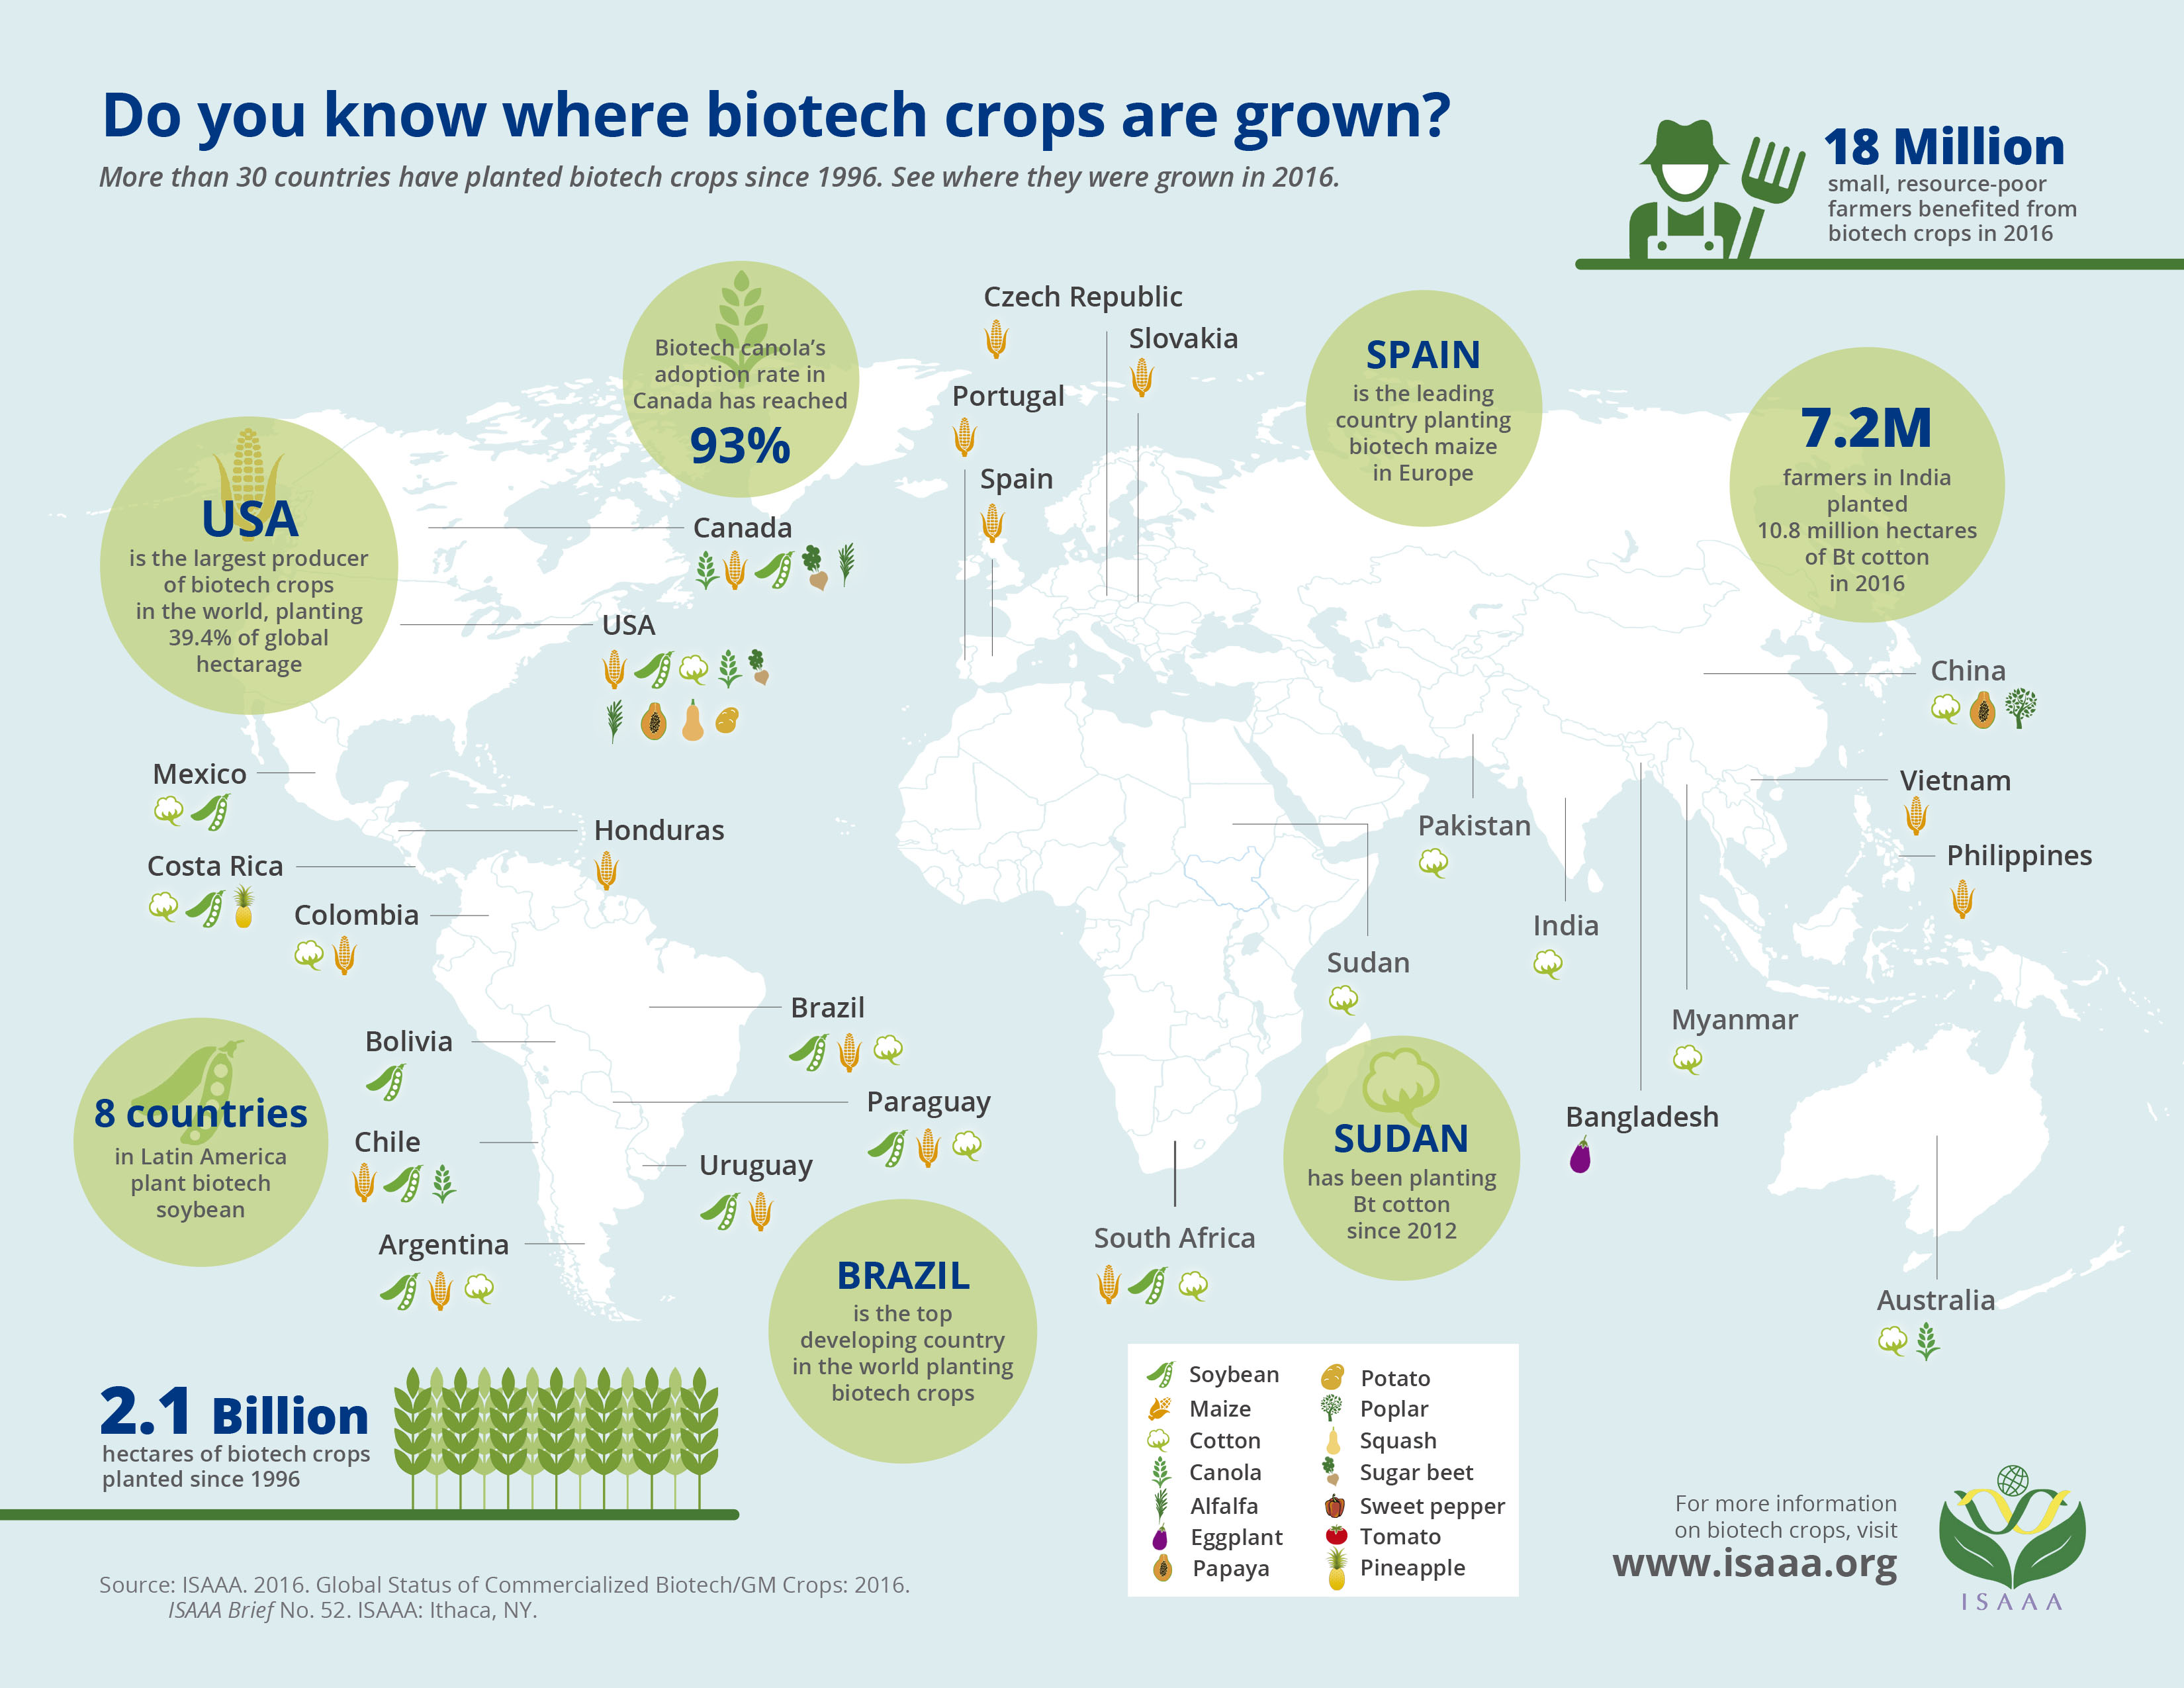 Do you know where biotech crops are grown? Fundacion Antama